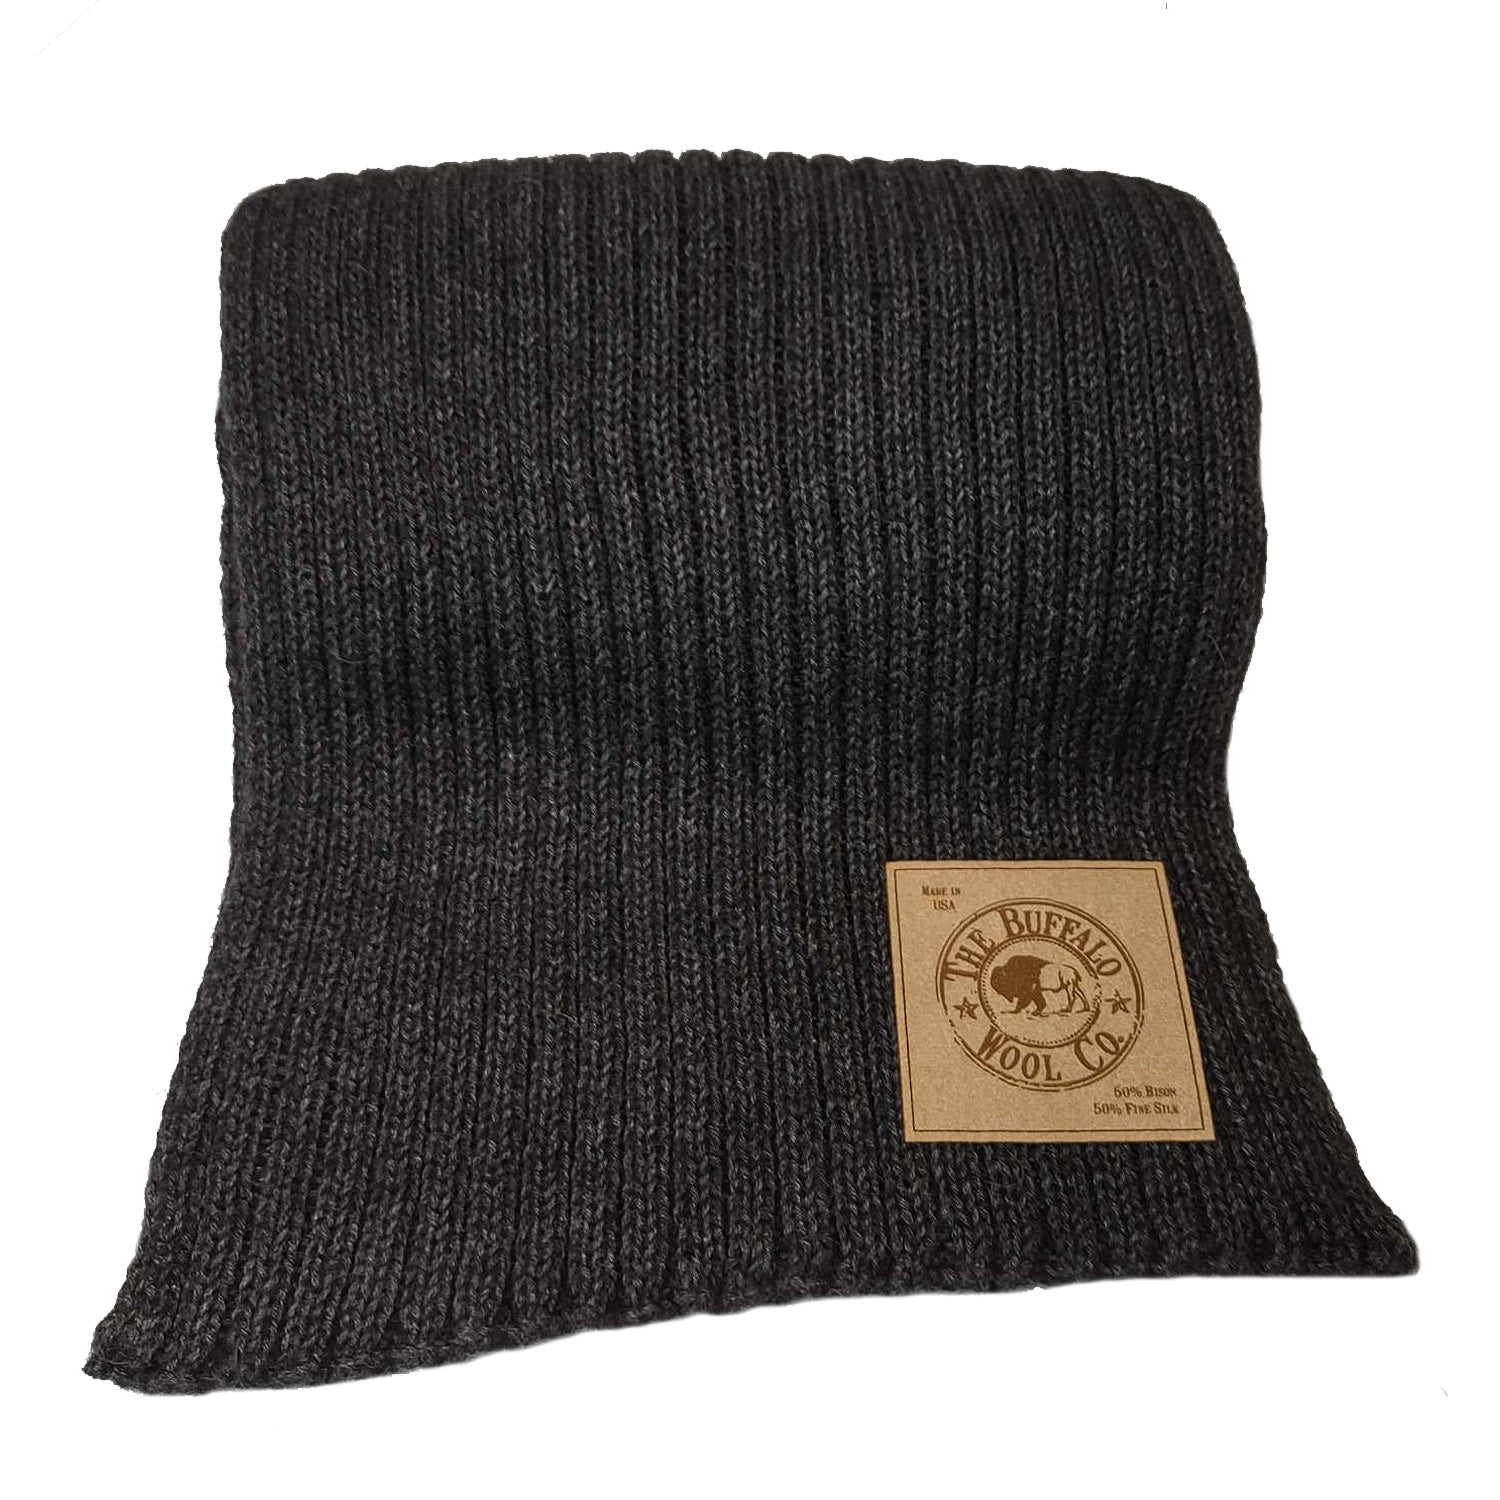 Bison/silk scarf – The Buffalo Wool Co.